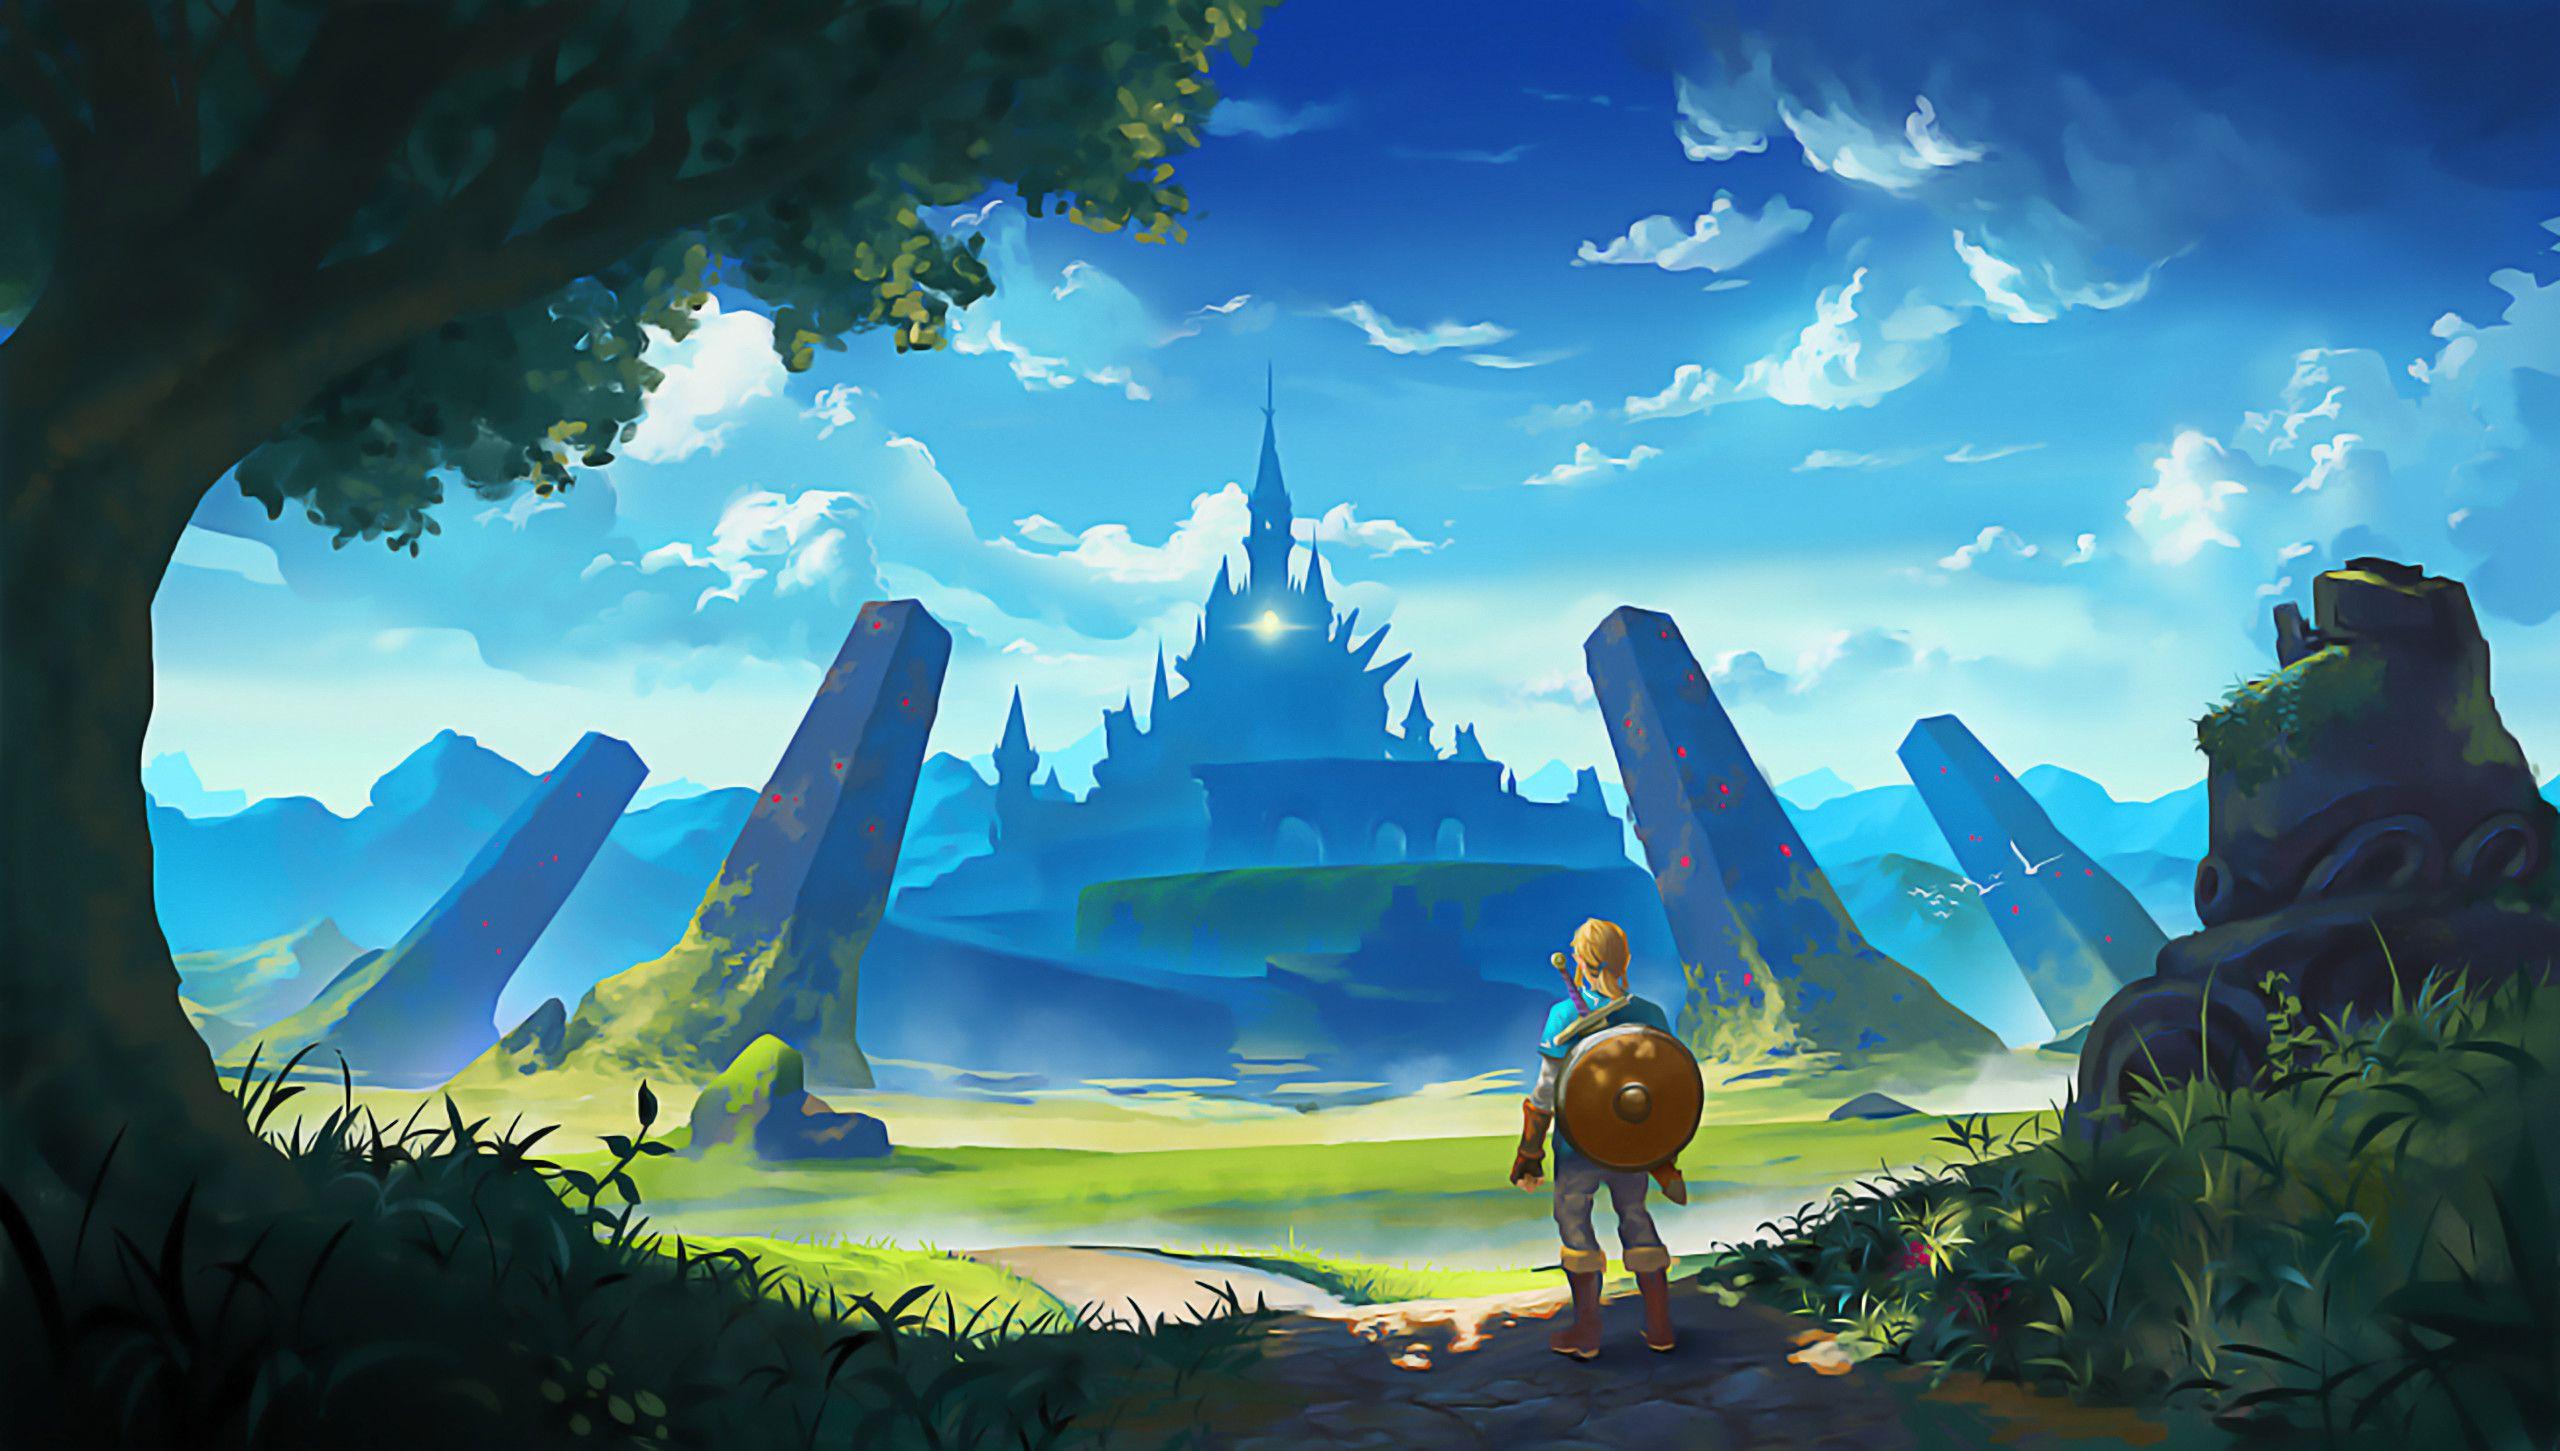 The Legend of Zelda Wallpapers - Top Những Hình Ảnh Đẹp